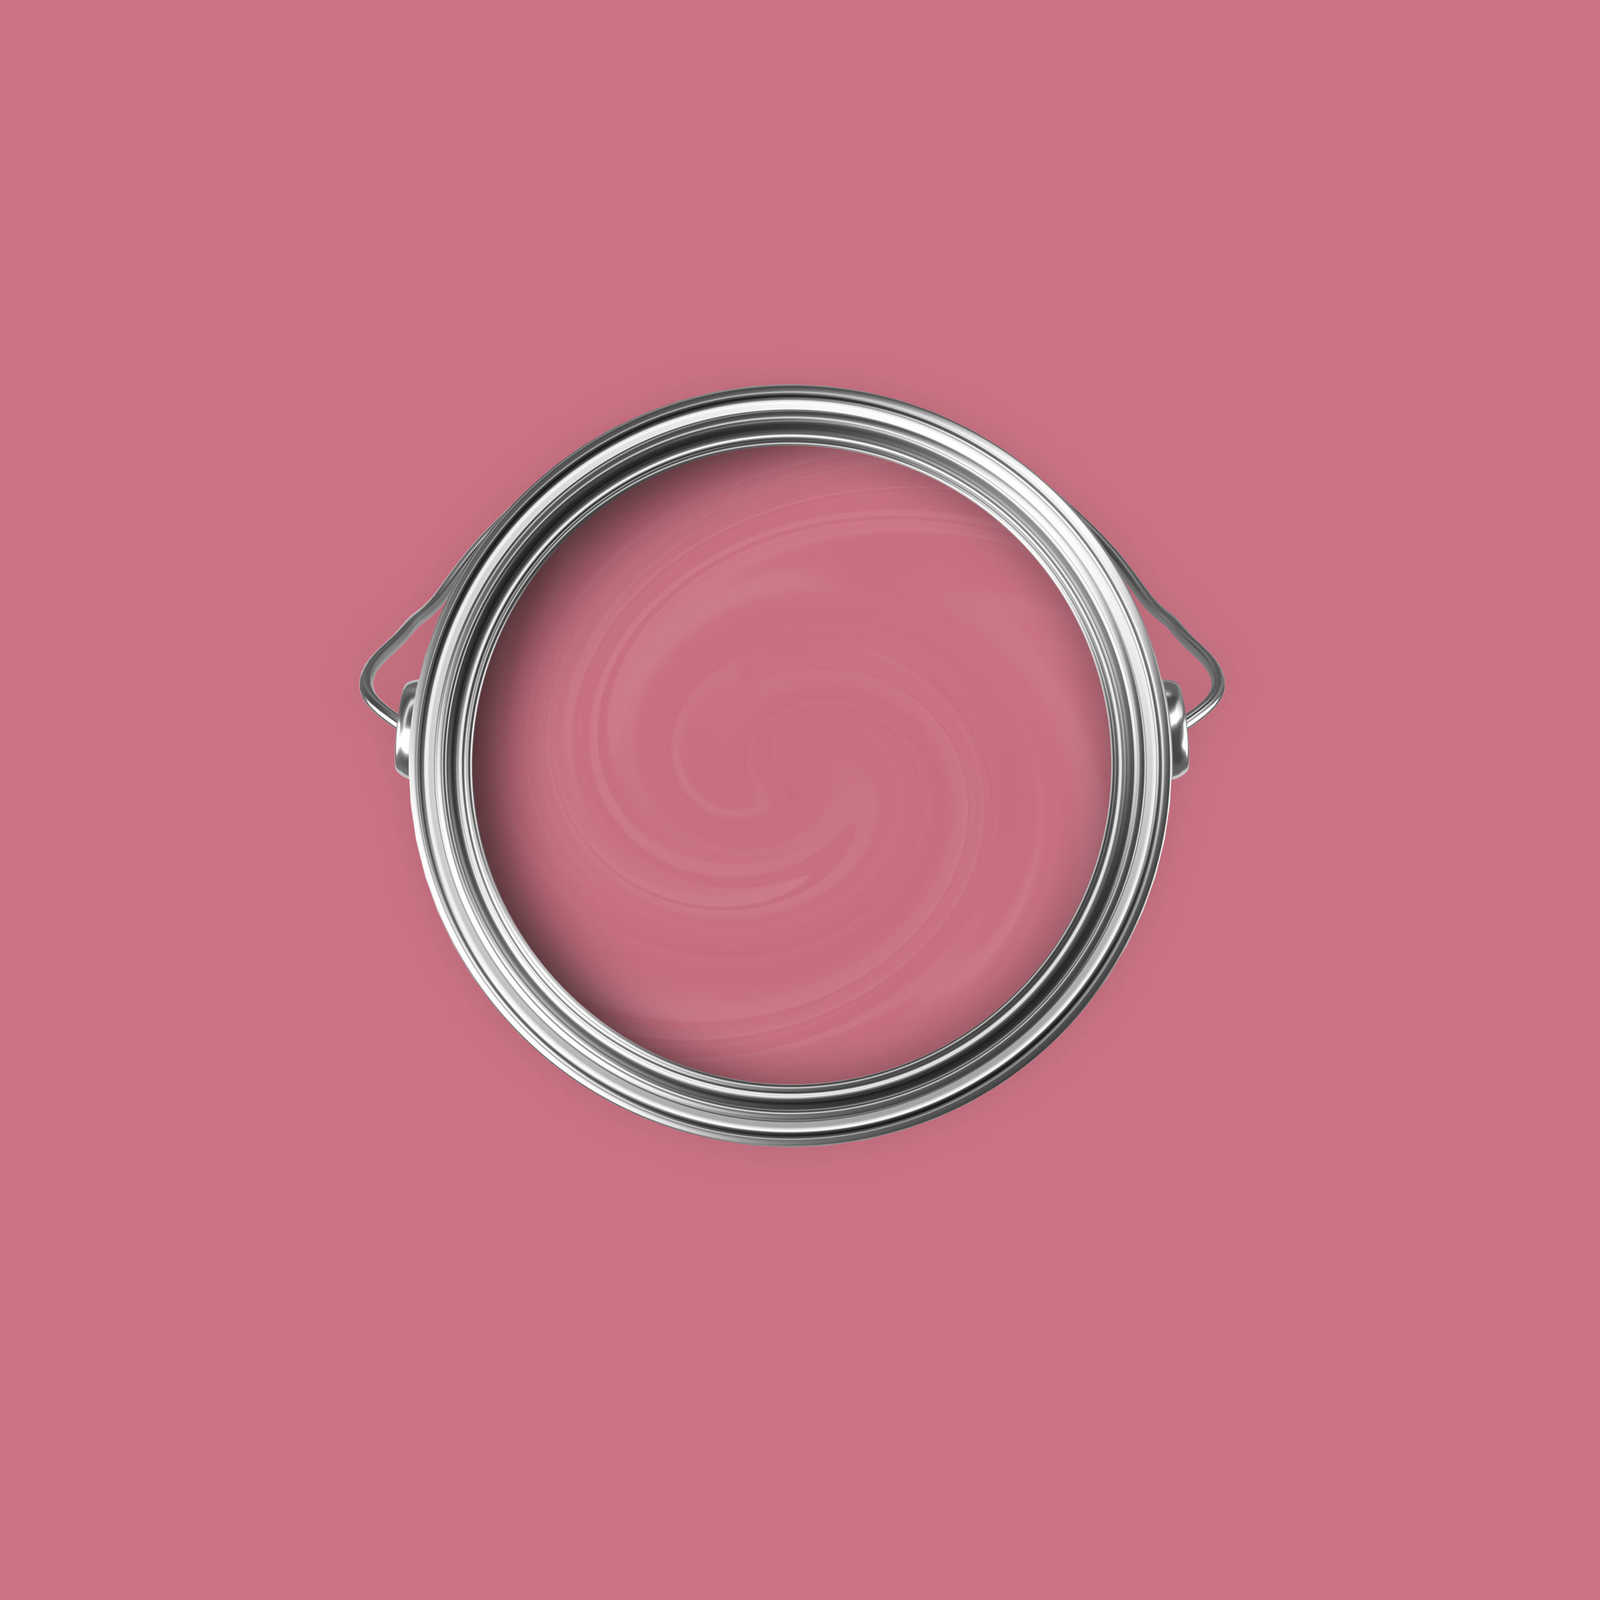             Premium Muurverf Refreshing Dark Pink »Blooming Blossom« NW1018 – 2,5 Liter
        